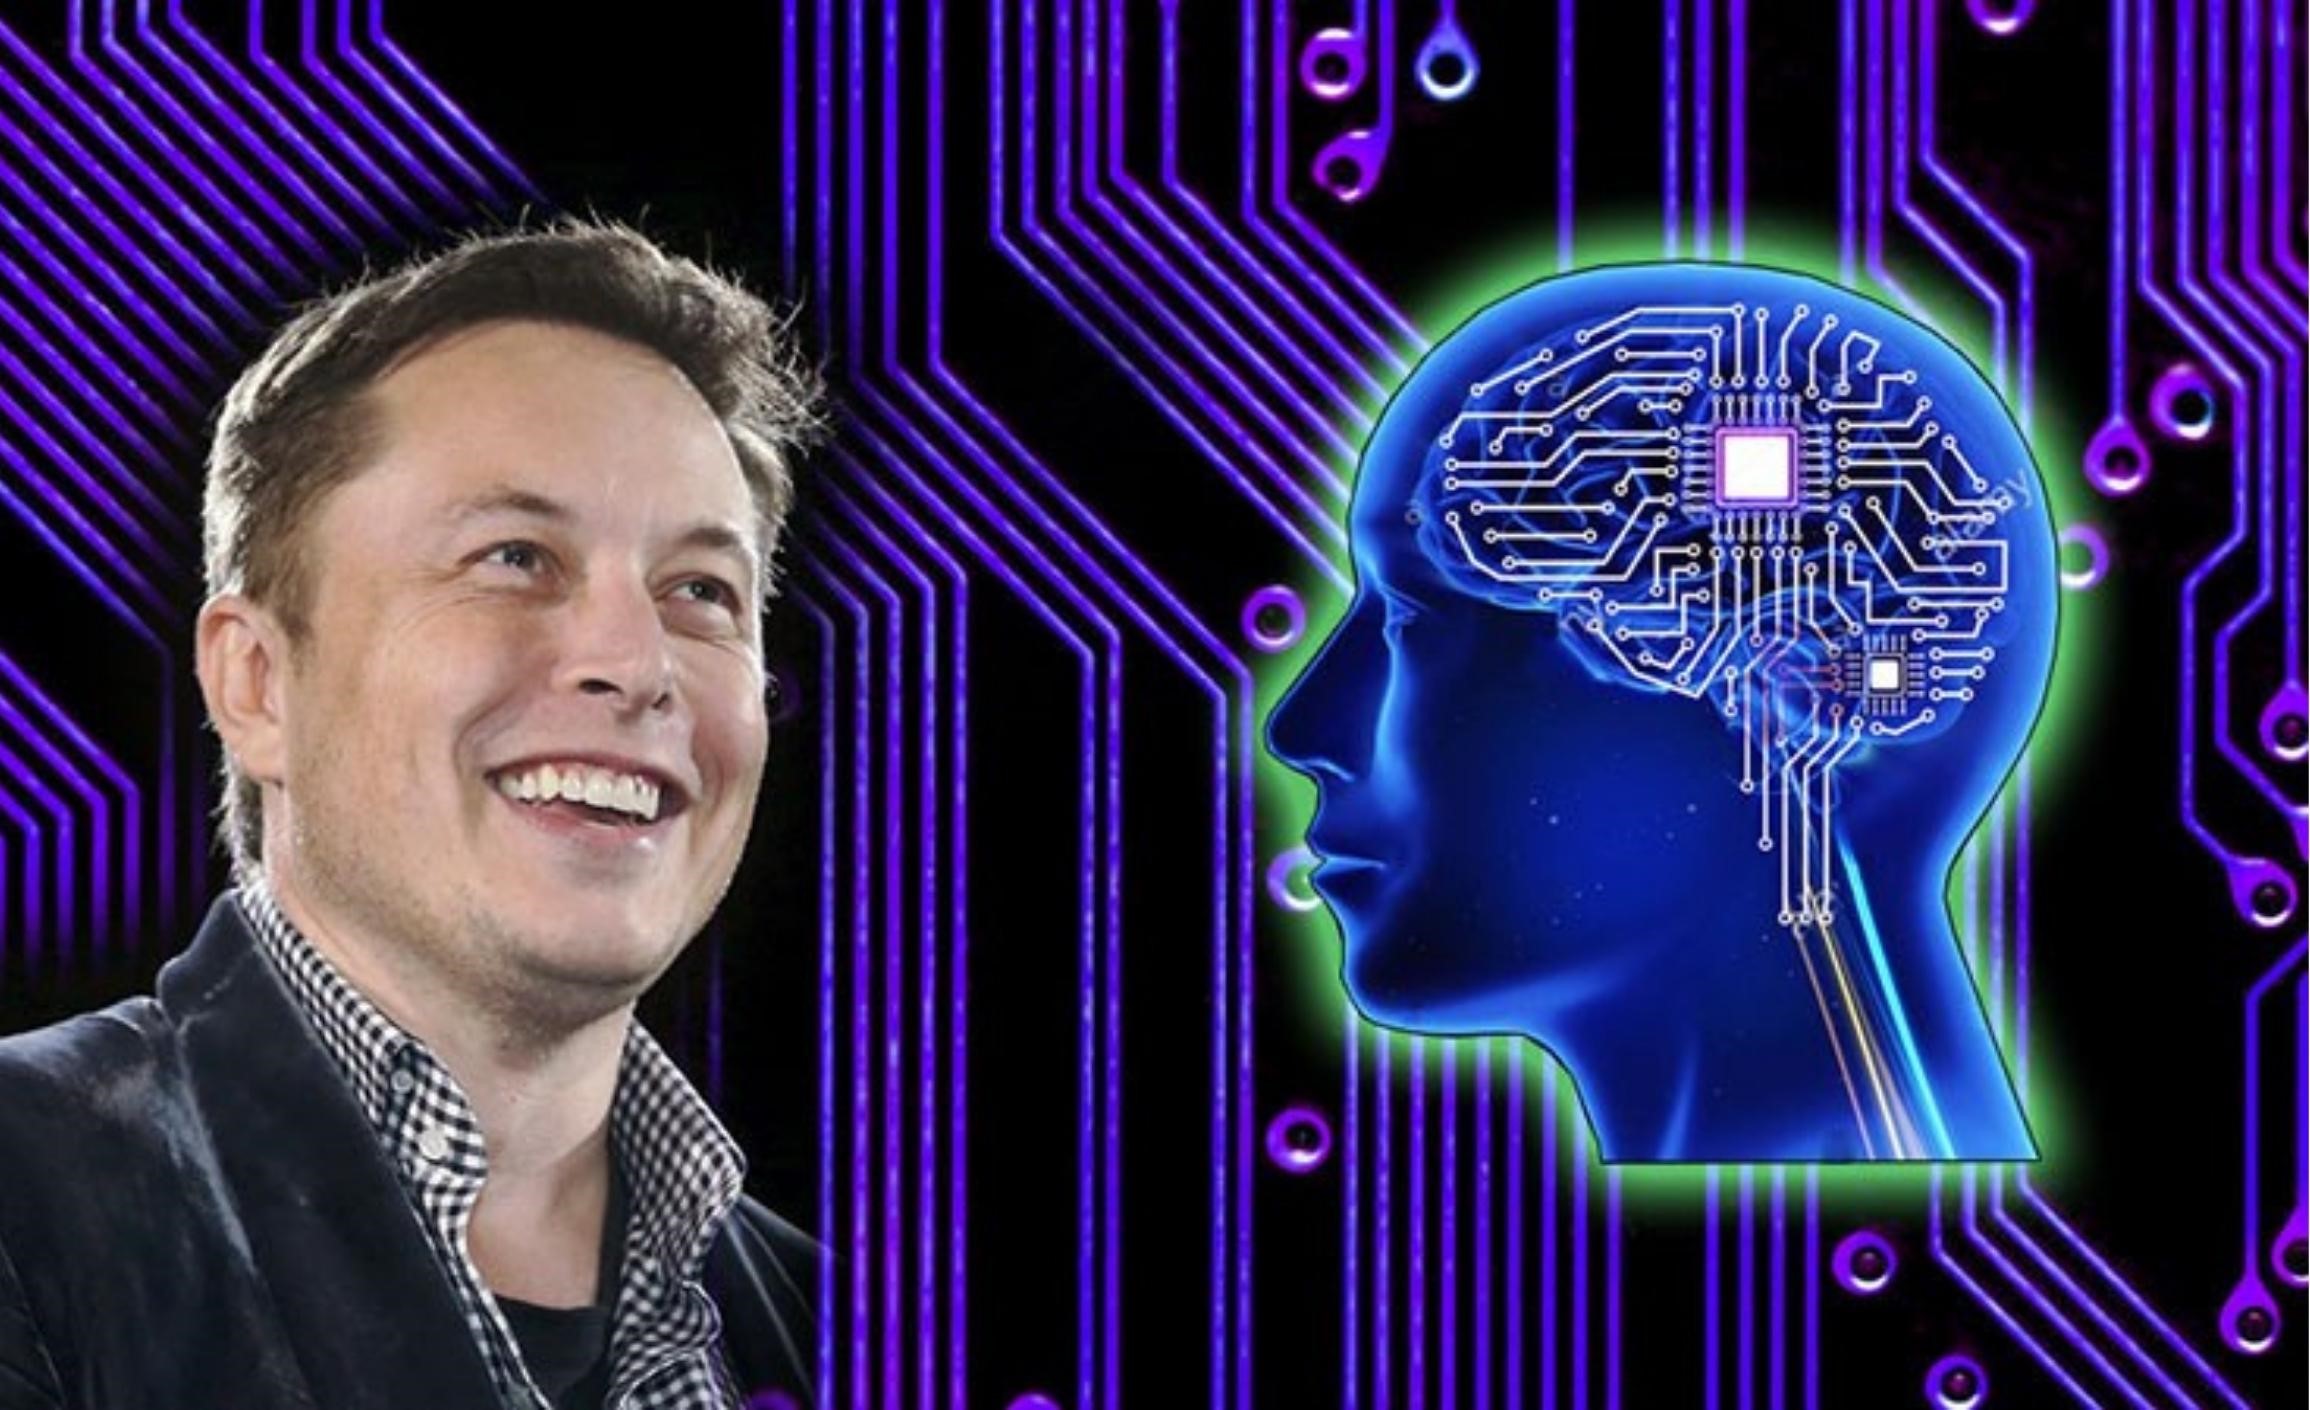 Rajkotupdates.news: Elon Musk in 2022 starts implanting brain chips in humans through Neuralink